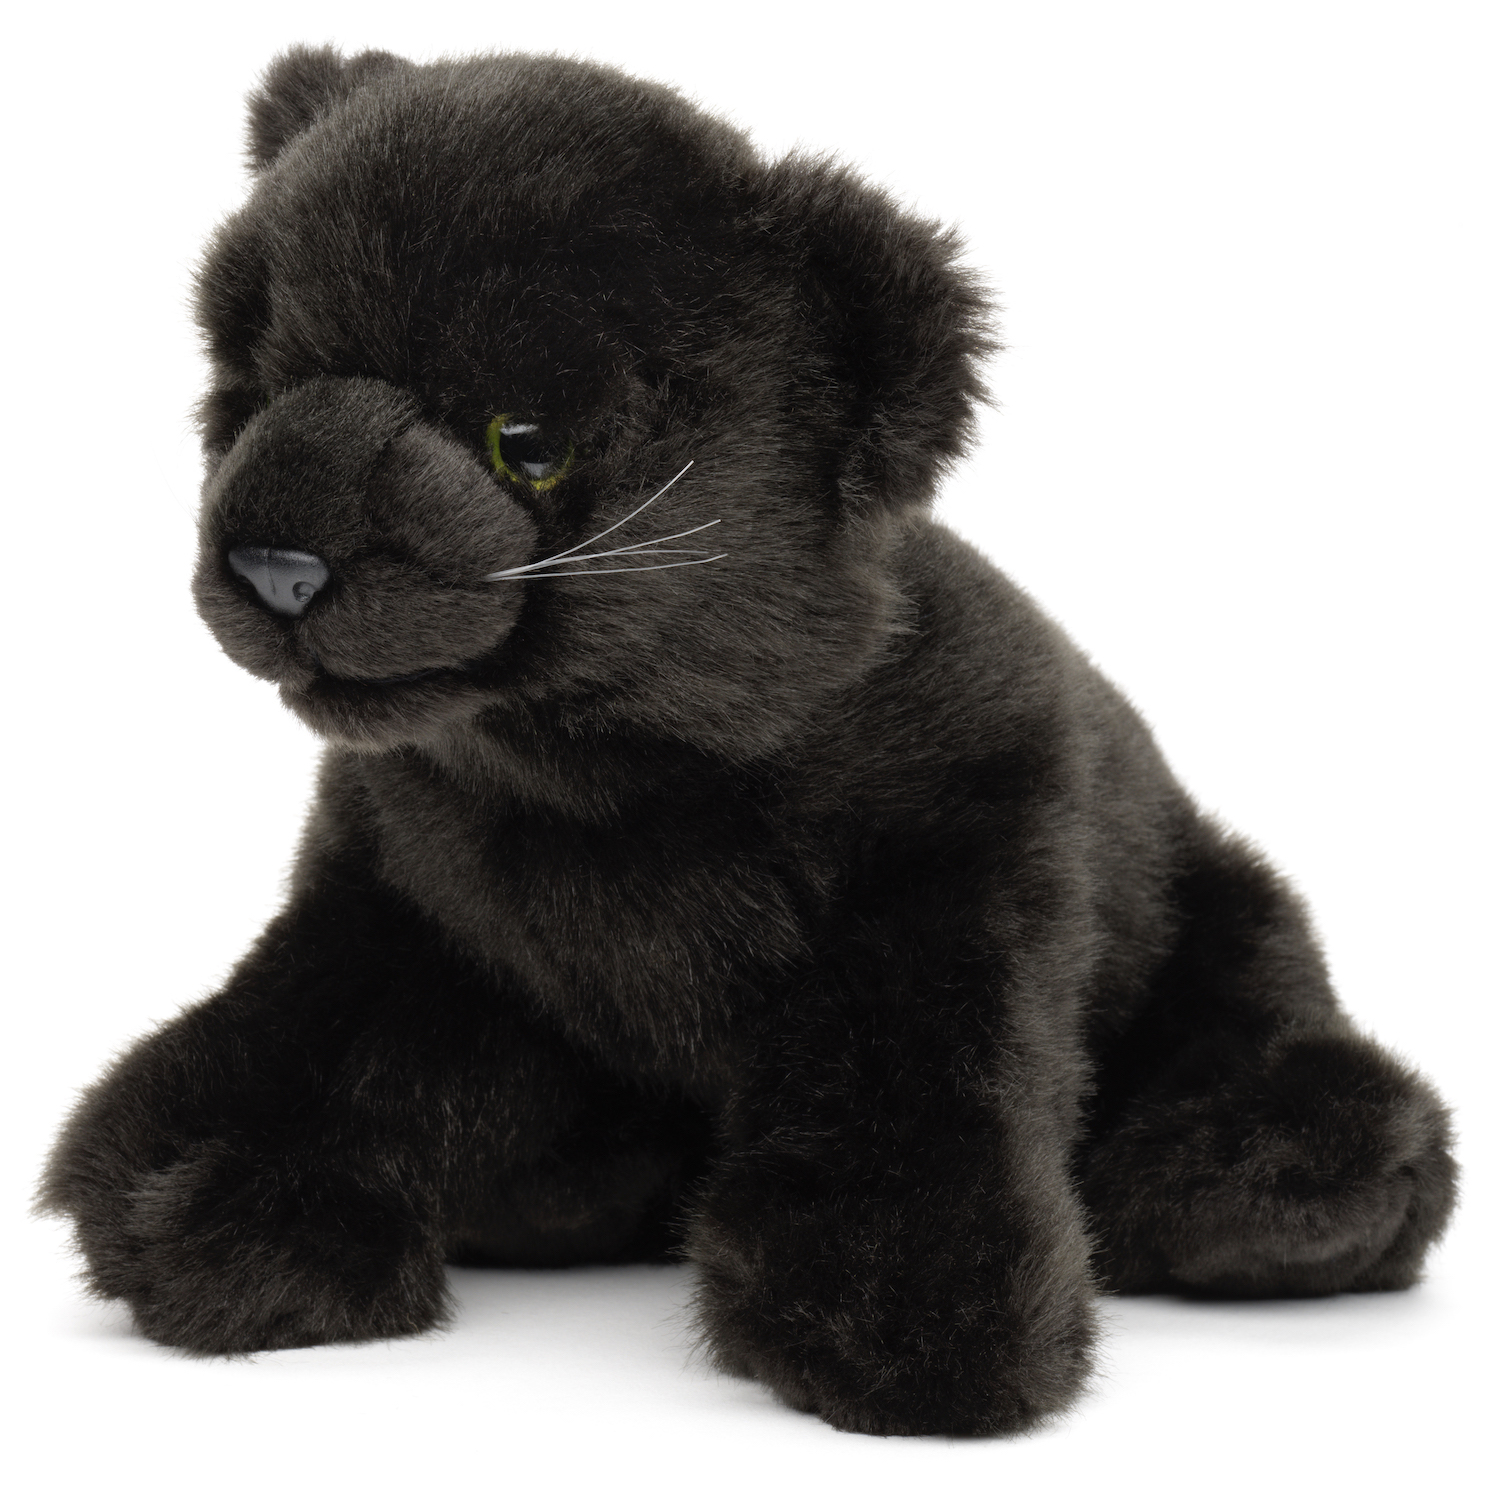 Black Panther Baby, sitting - 25 cm (length)